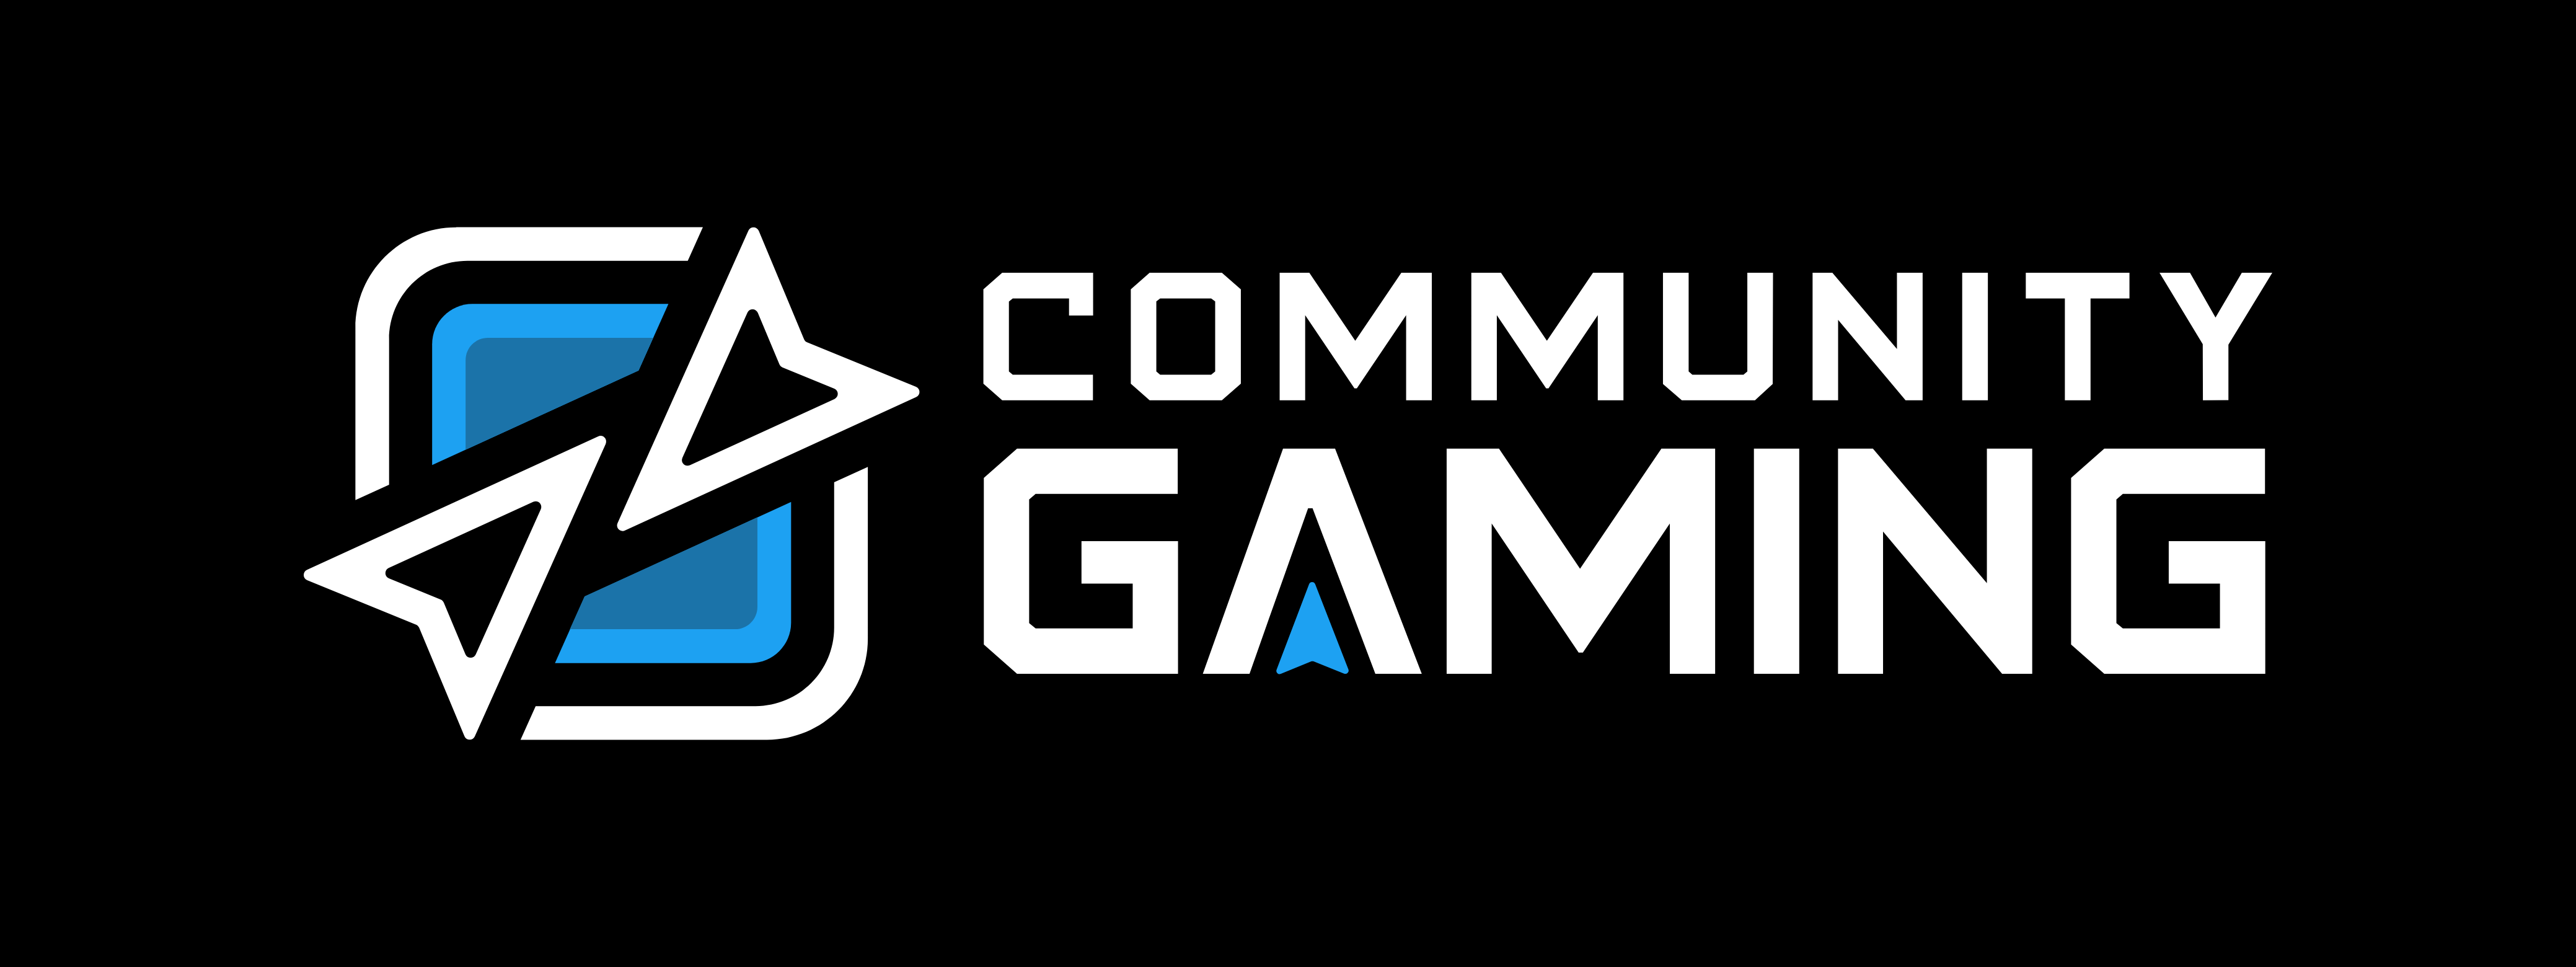 community gaming